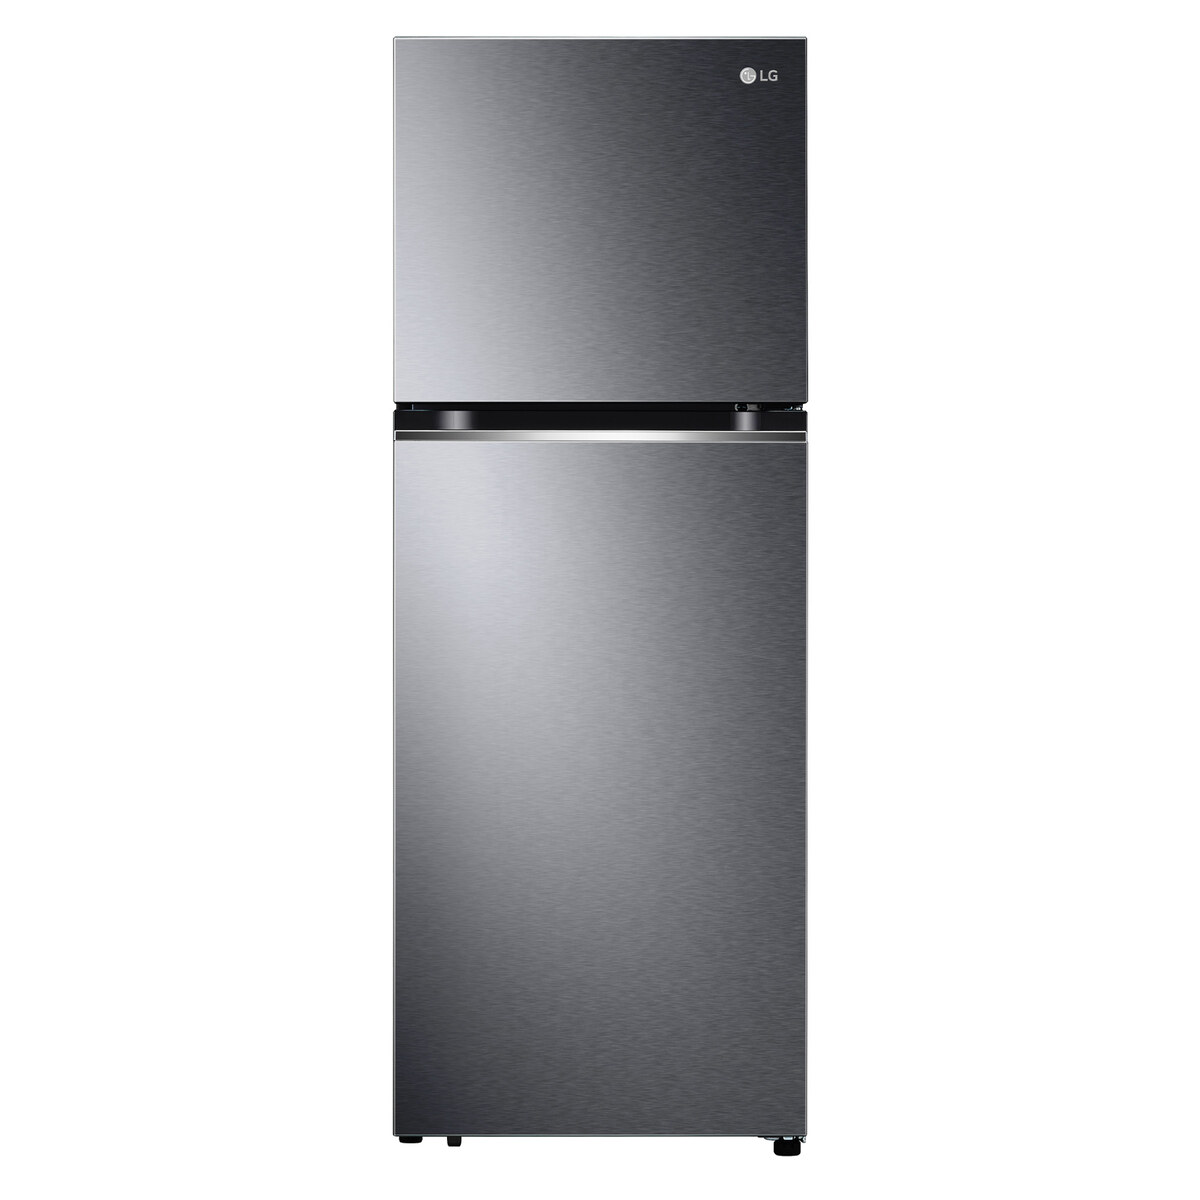 LG  Double Door  Refrigerator  GN-B422PQGB - 420Ltr